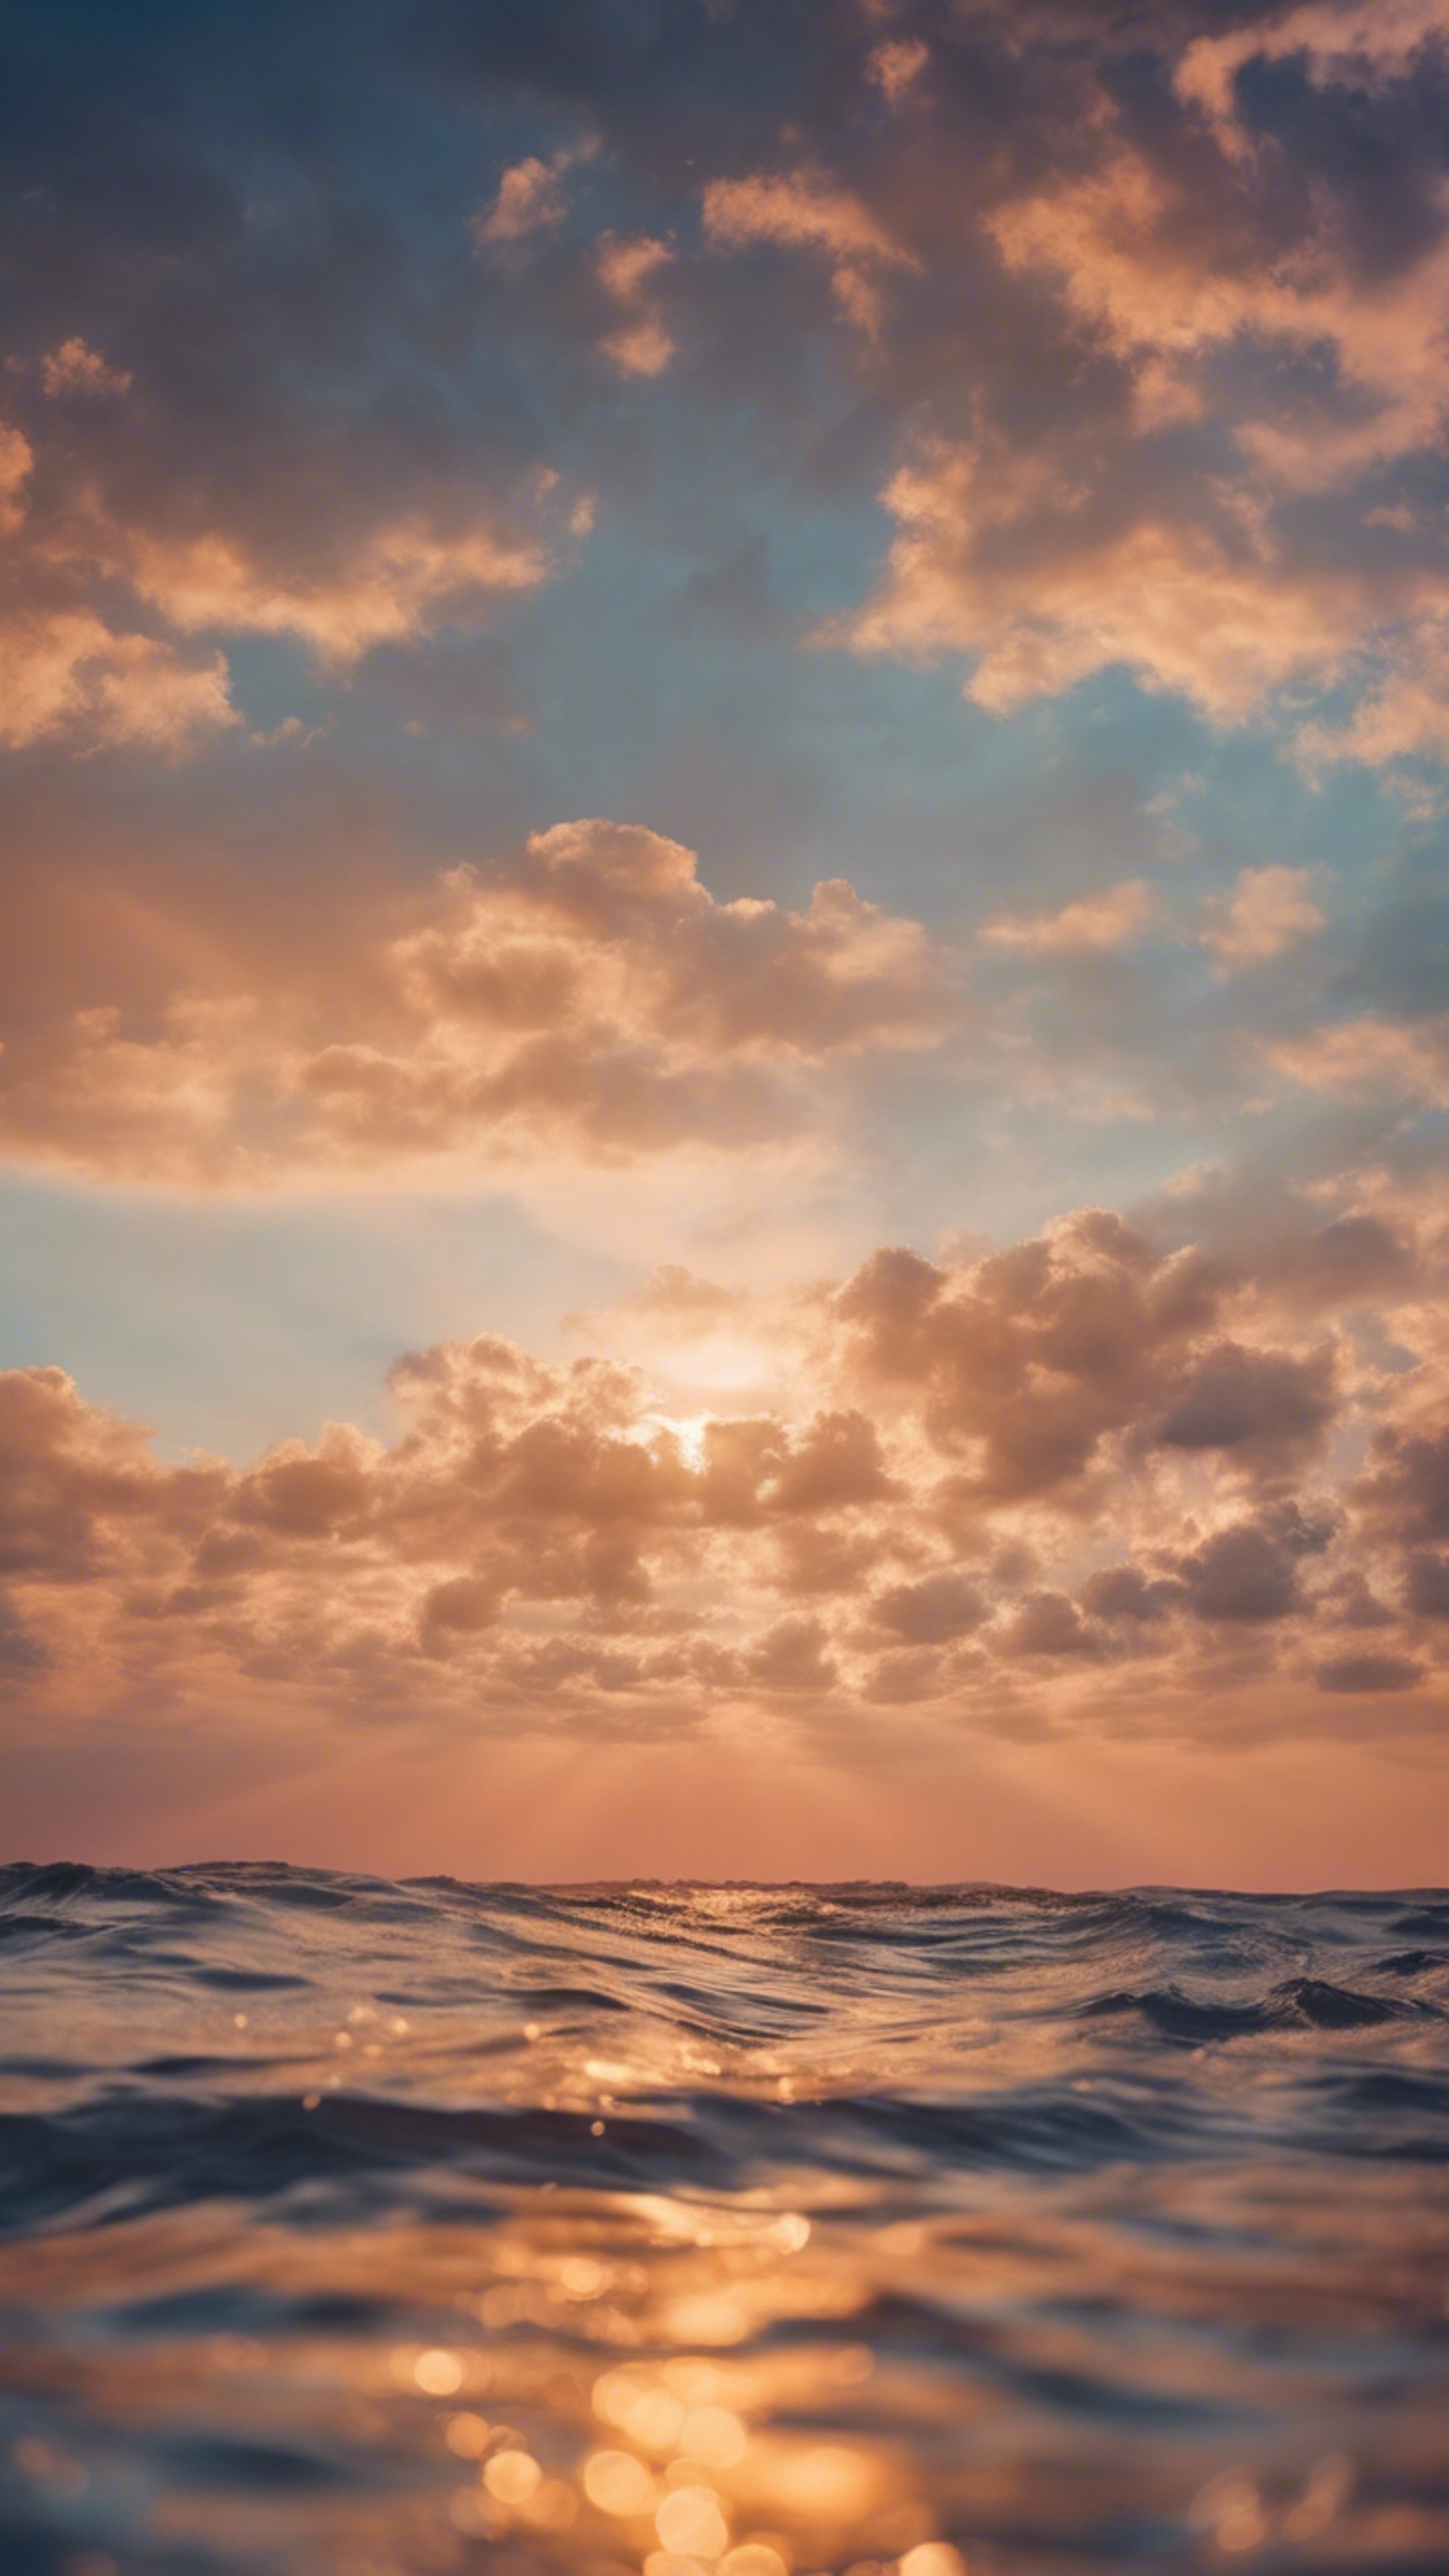 A dream scenario of a deep sapphire sea meeting the heavenly light peach hues of the sky at sunset. ផ្ទាំង​រូបភាព[ea94eb2fc81f4c8faf8f]